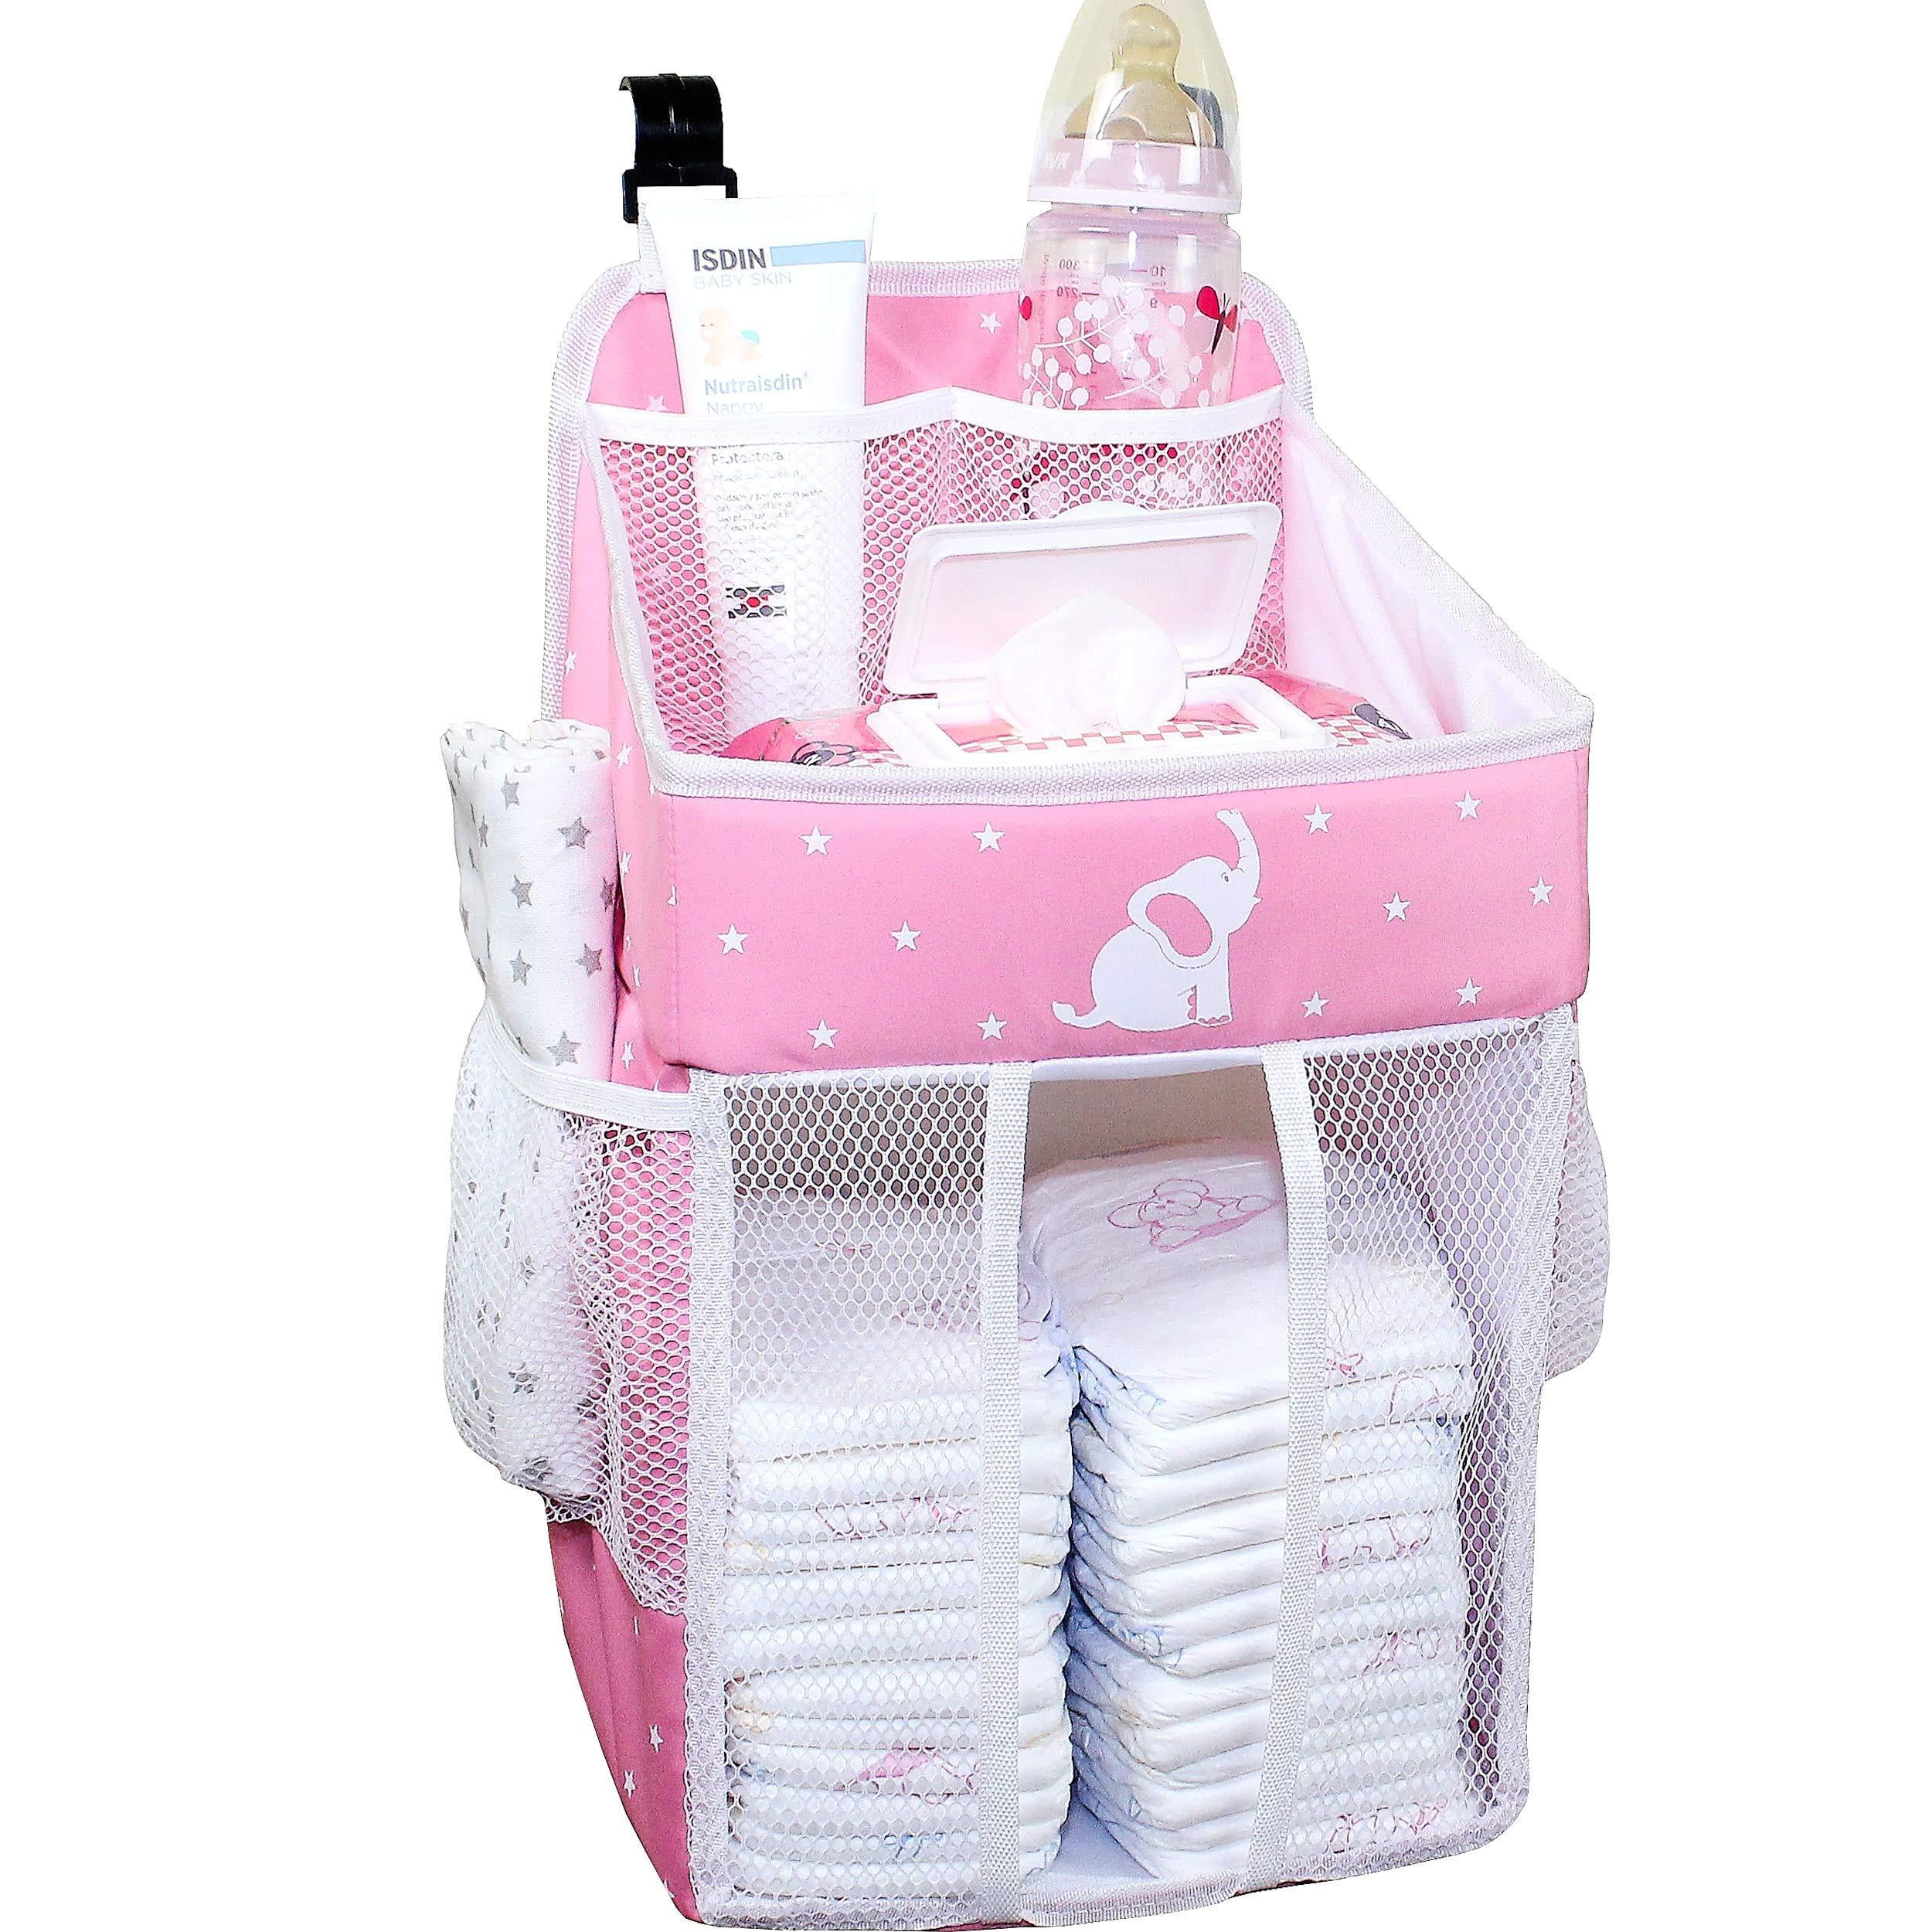 Crib Playard o Wall & Nursery Organizer Baby Shower Gifts for Newborn Hanging Diaper Caddy Organizer Diaper Stacker per Table 